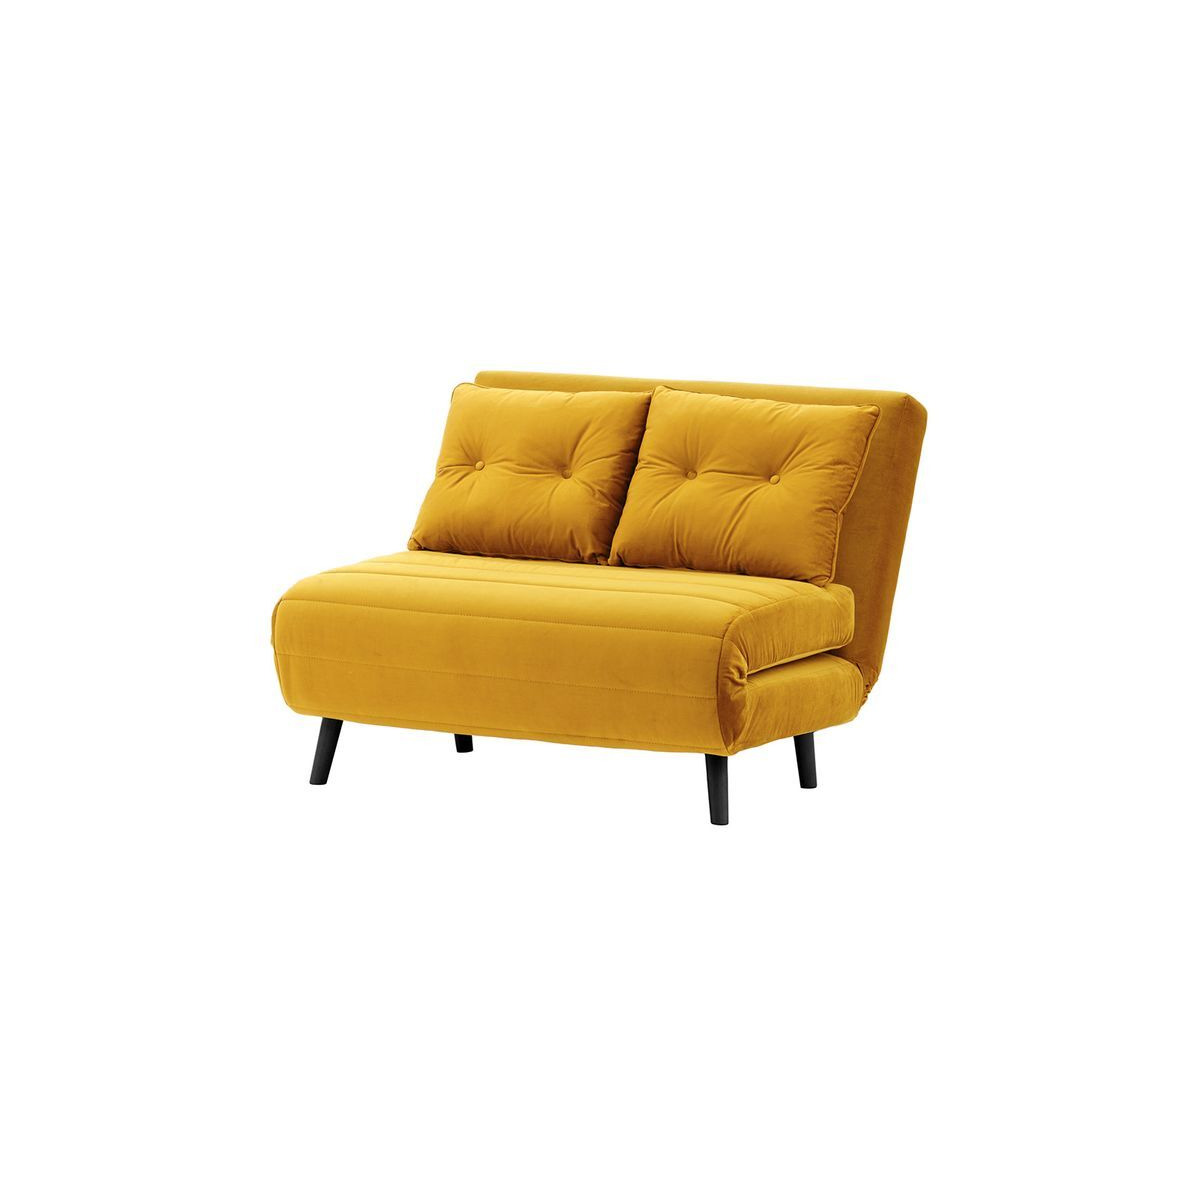 Flic Small Sofa Bed - width 103 cm, light blue, Leg colour: black - image 1